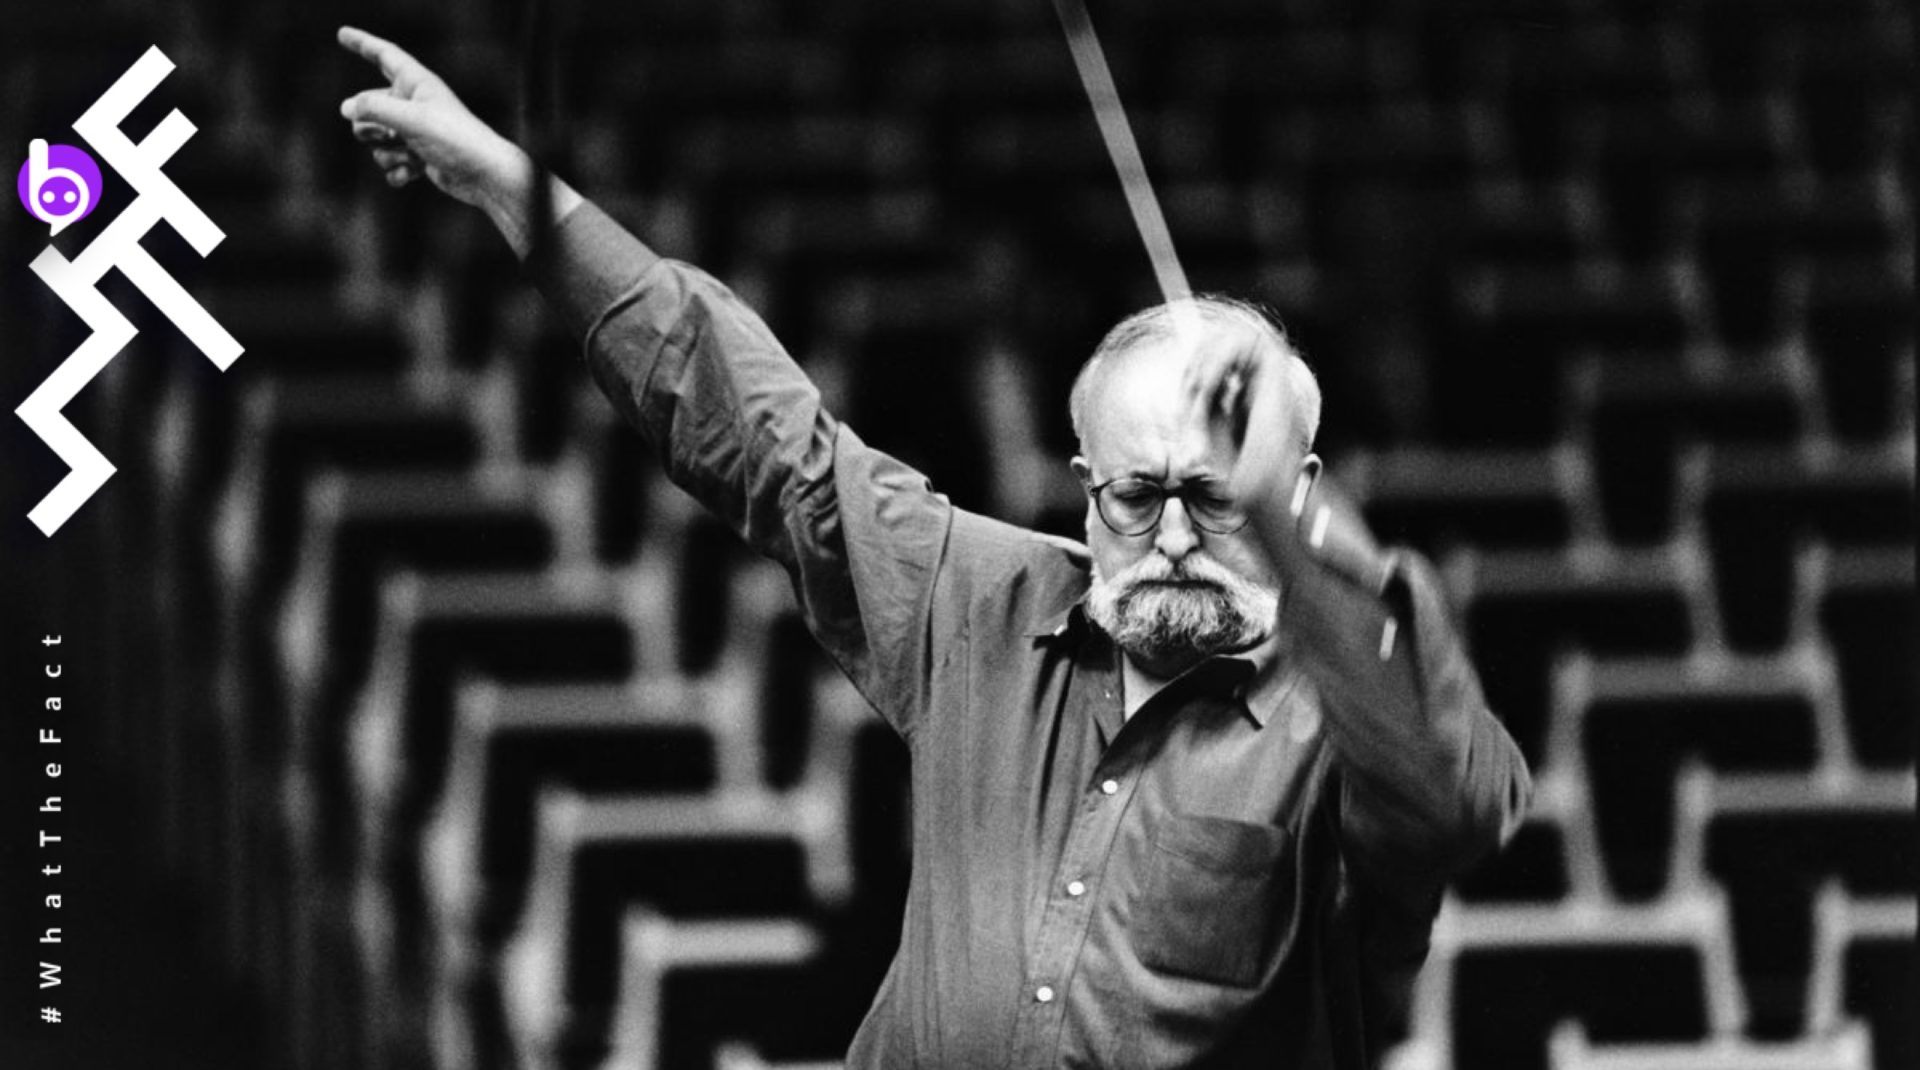 Krzysztof Penderecki ยอดนักประพันธ์เพลง เจ้าของบทเพลงประกอบหนังสยองขวัญสุดคลาสสิก “The Exorcist” “The Shining” ได้เสียชีวิตแล้วในวัย 86 ปี